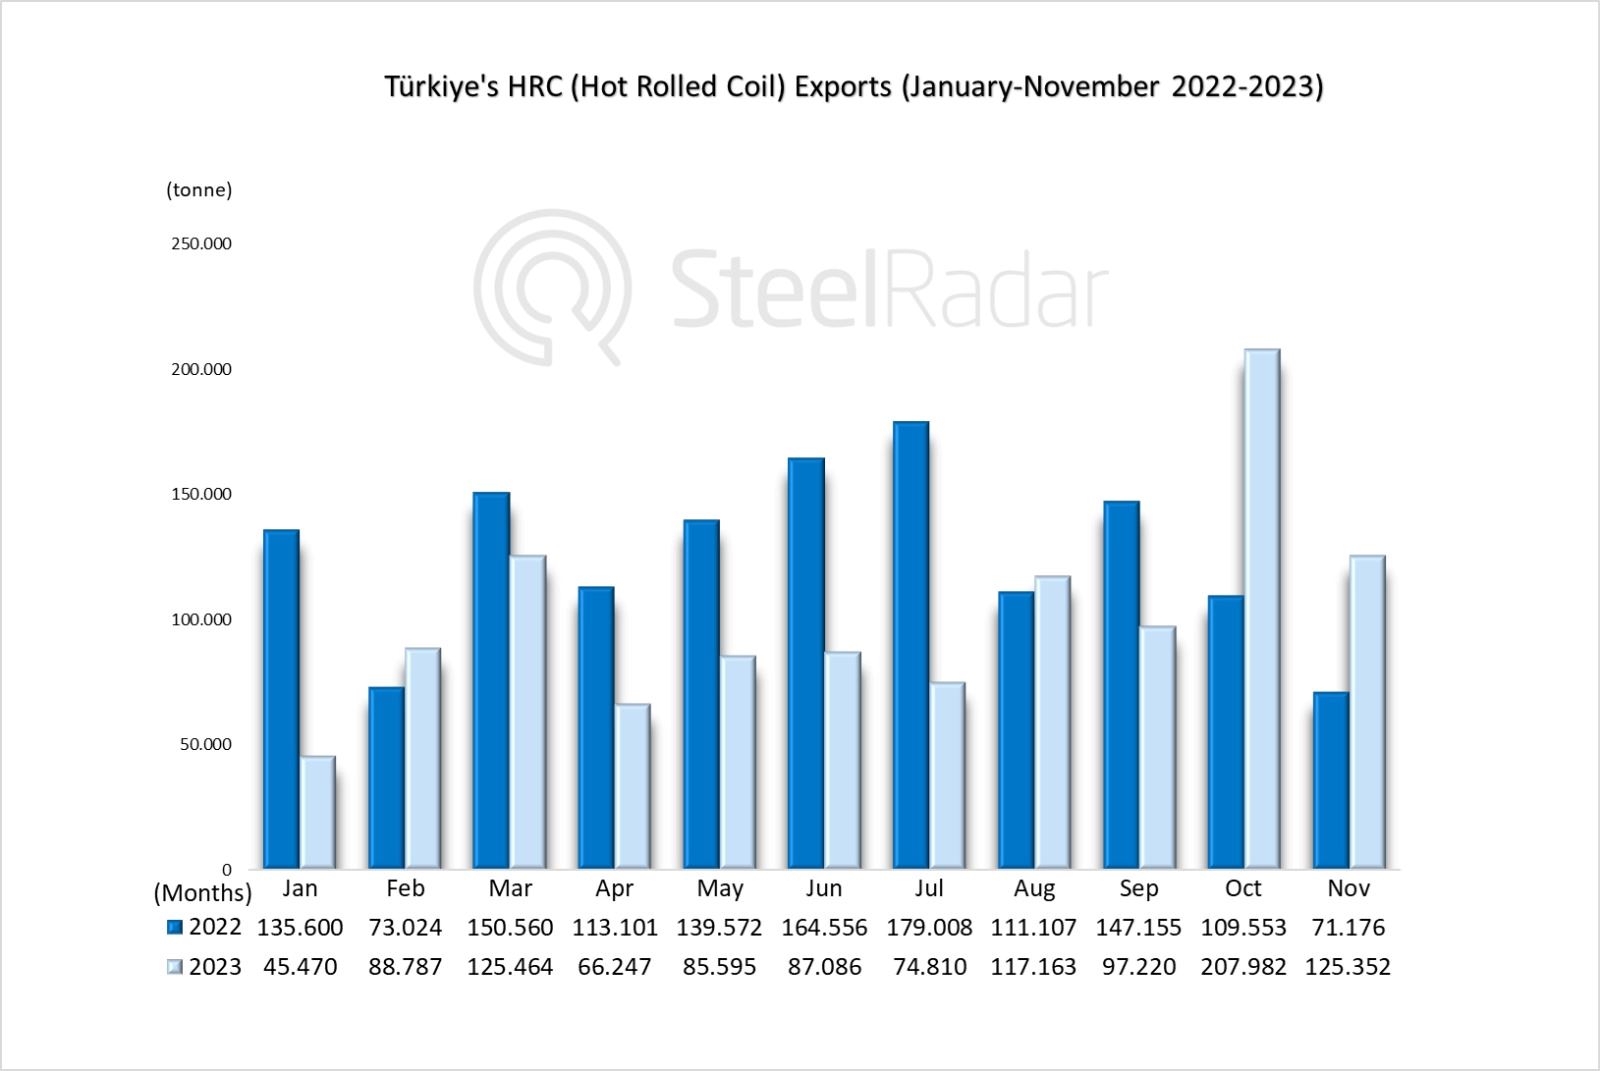 Turkiye's HRC exports increased by 76.12% in November